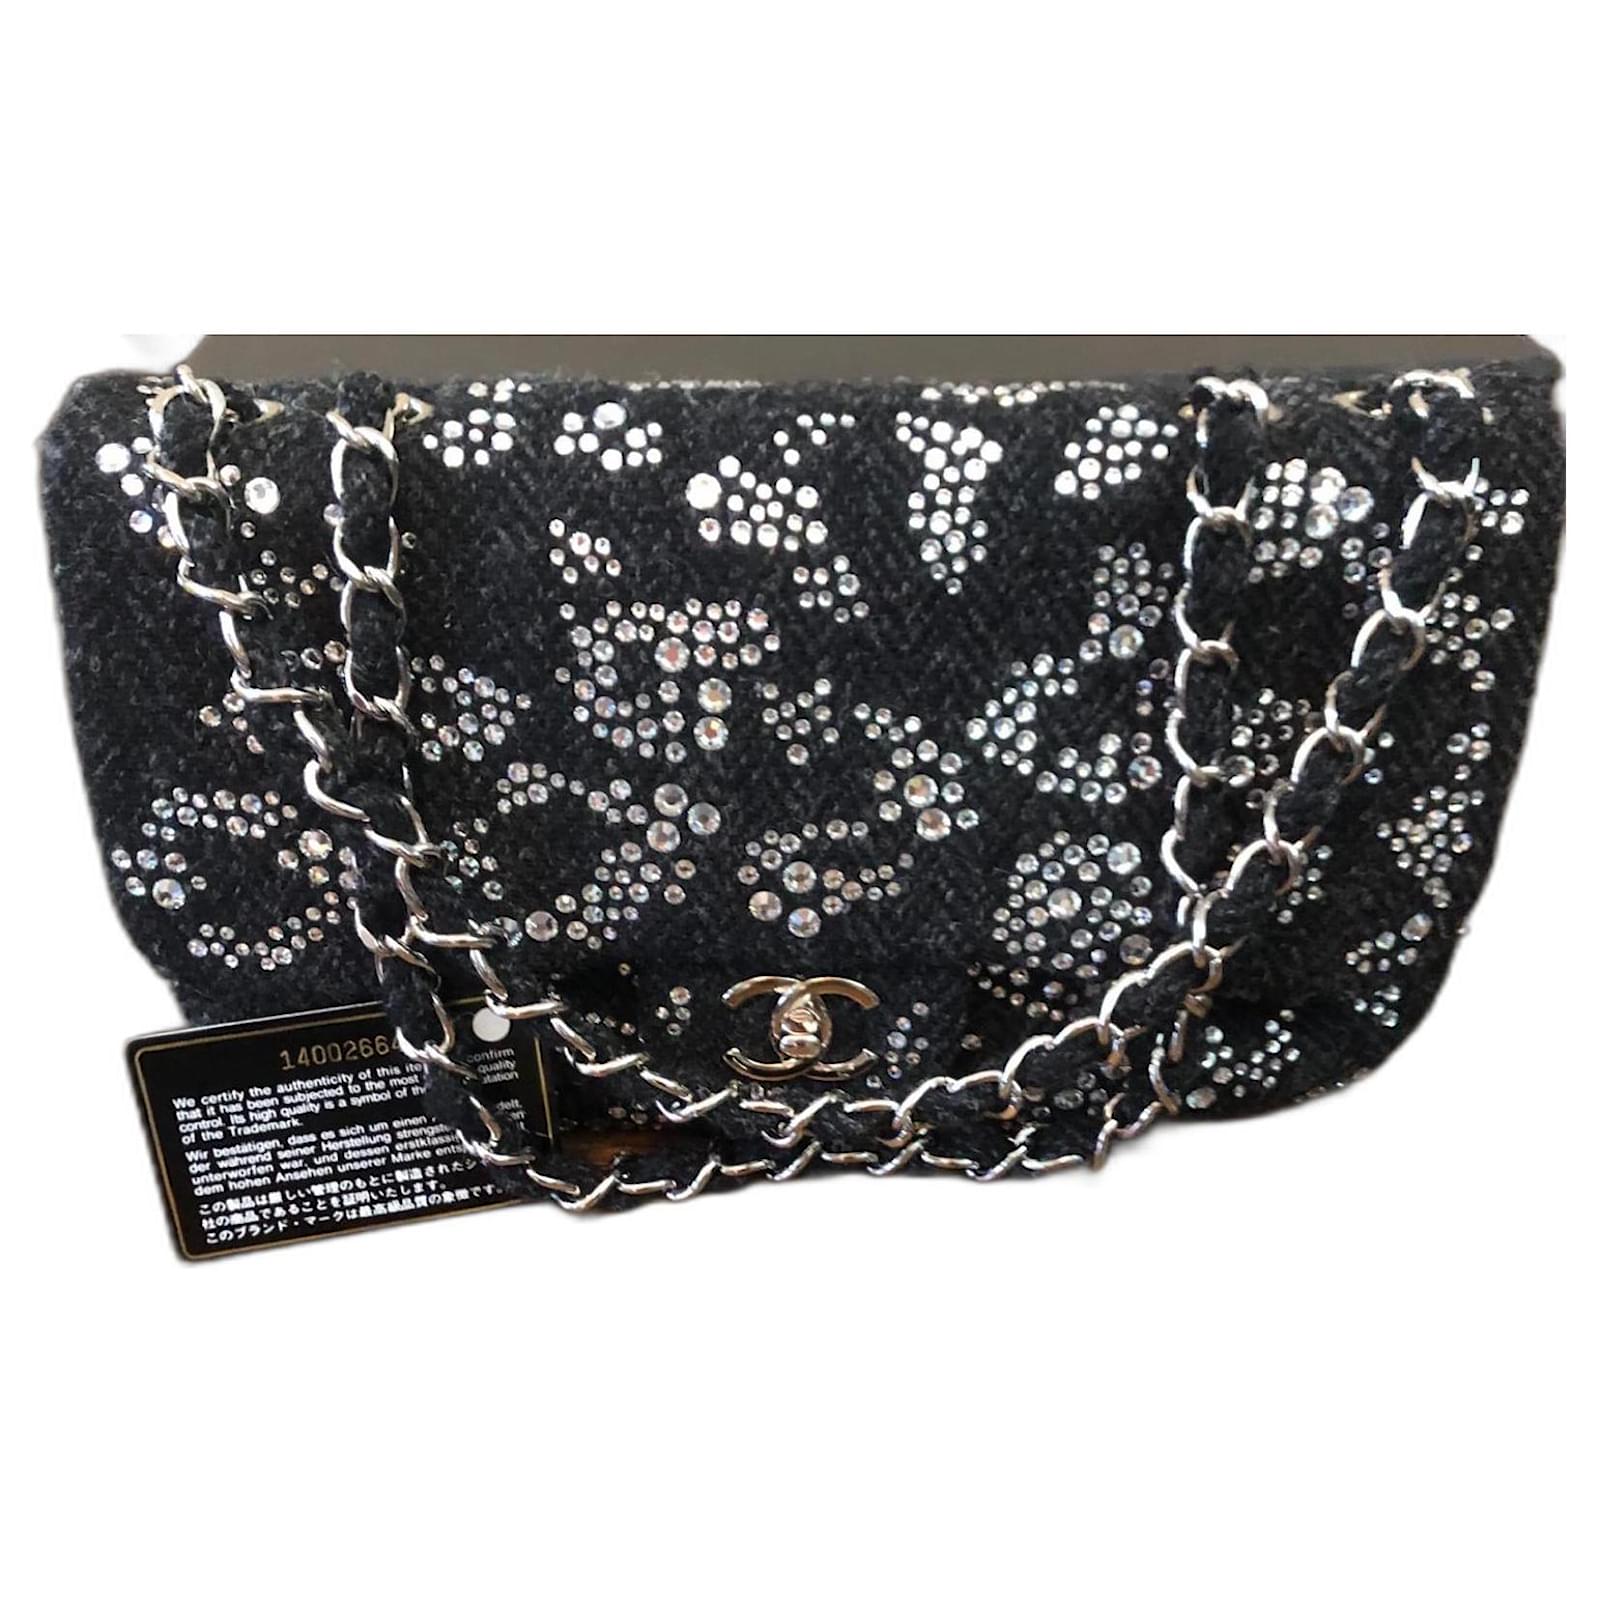 Chanel Swarovski Crystal Flap Bag